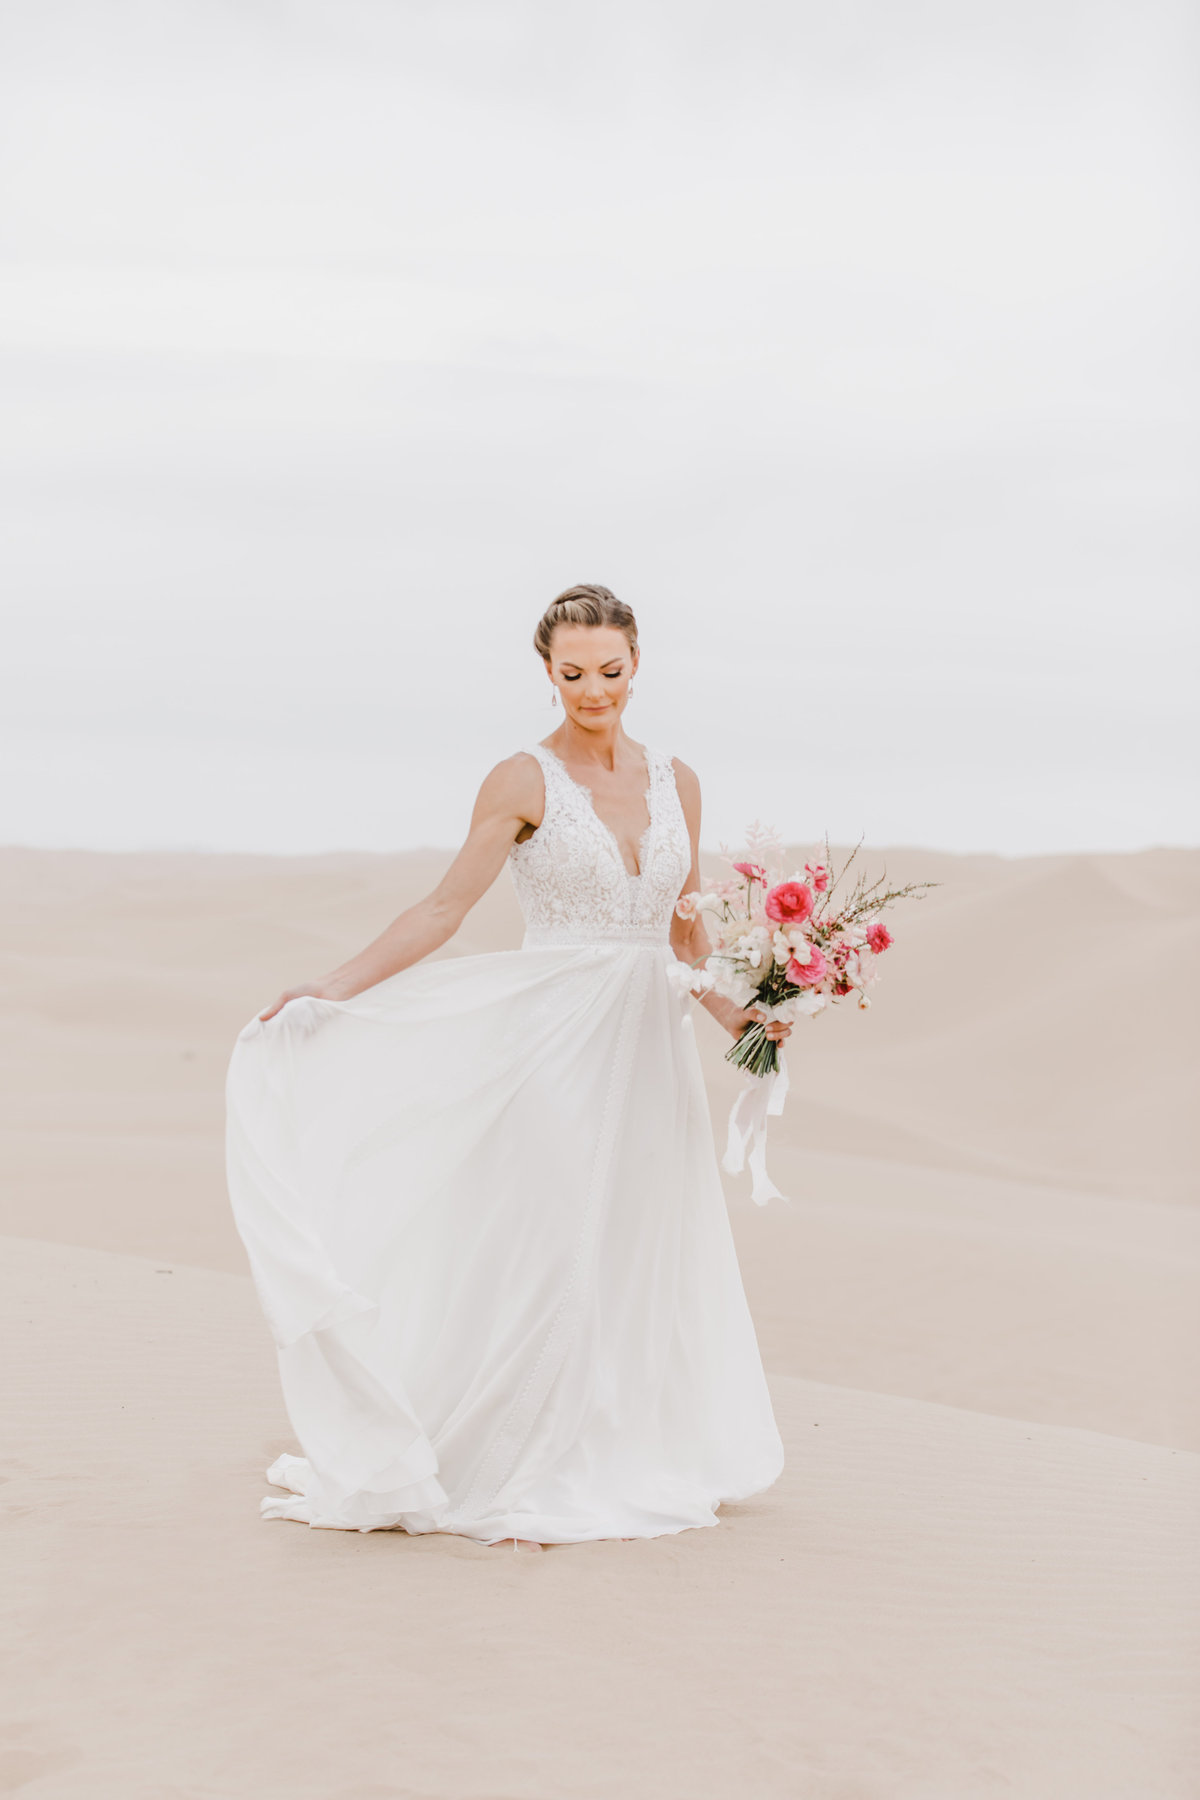 I am a California wedding photographer based in San Diego